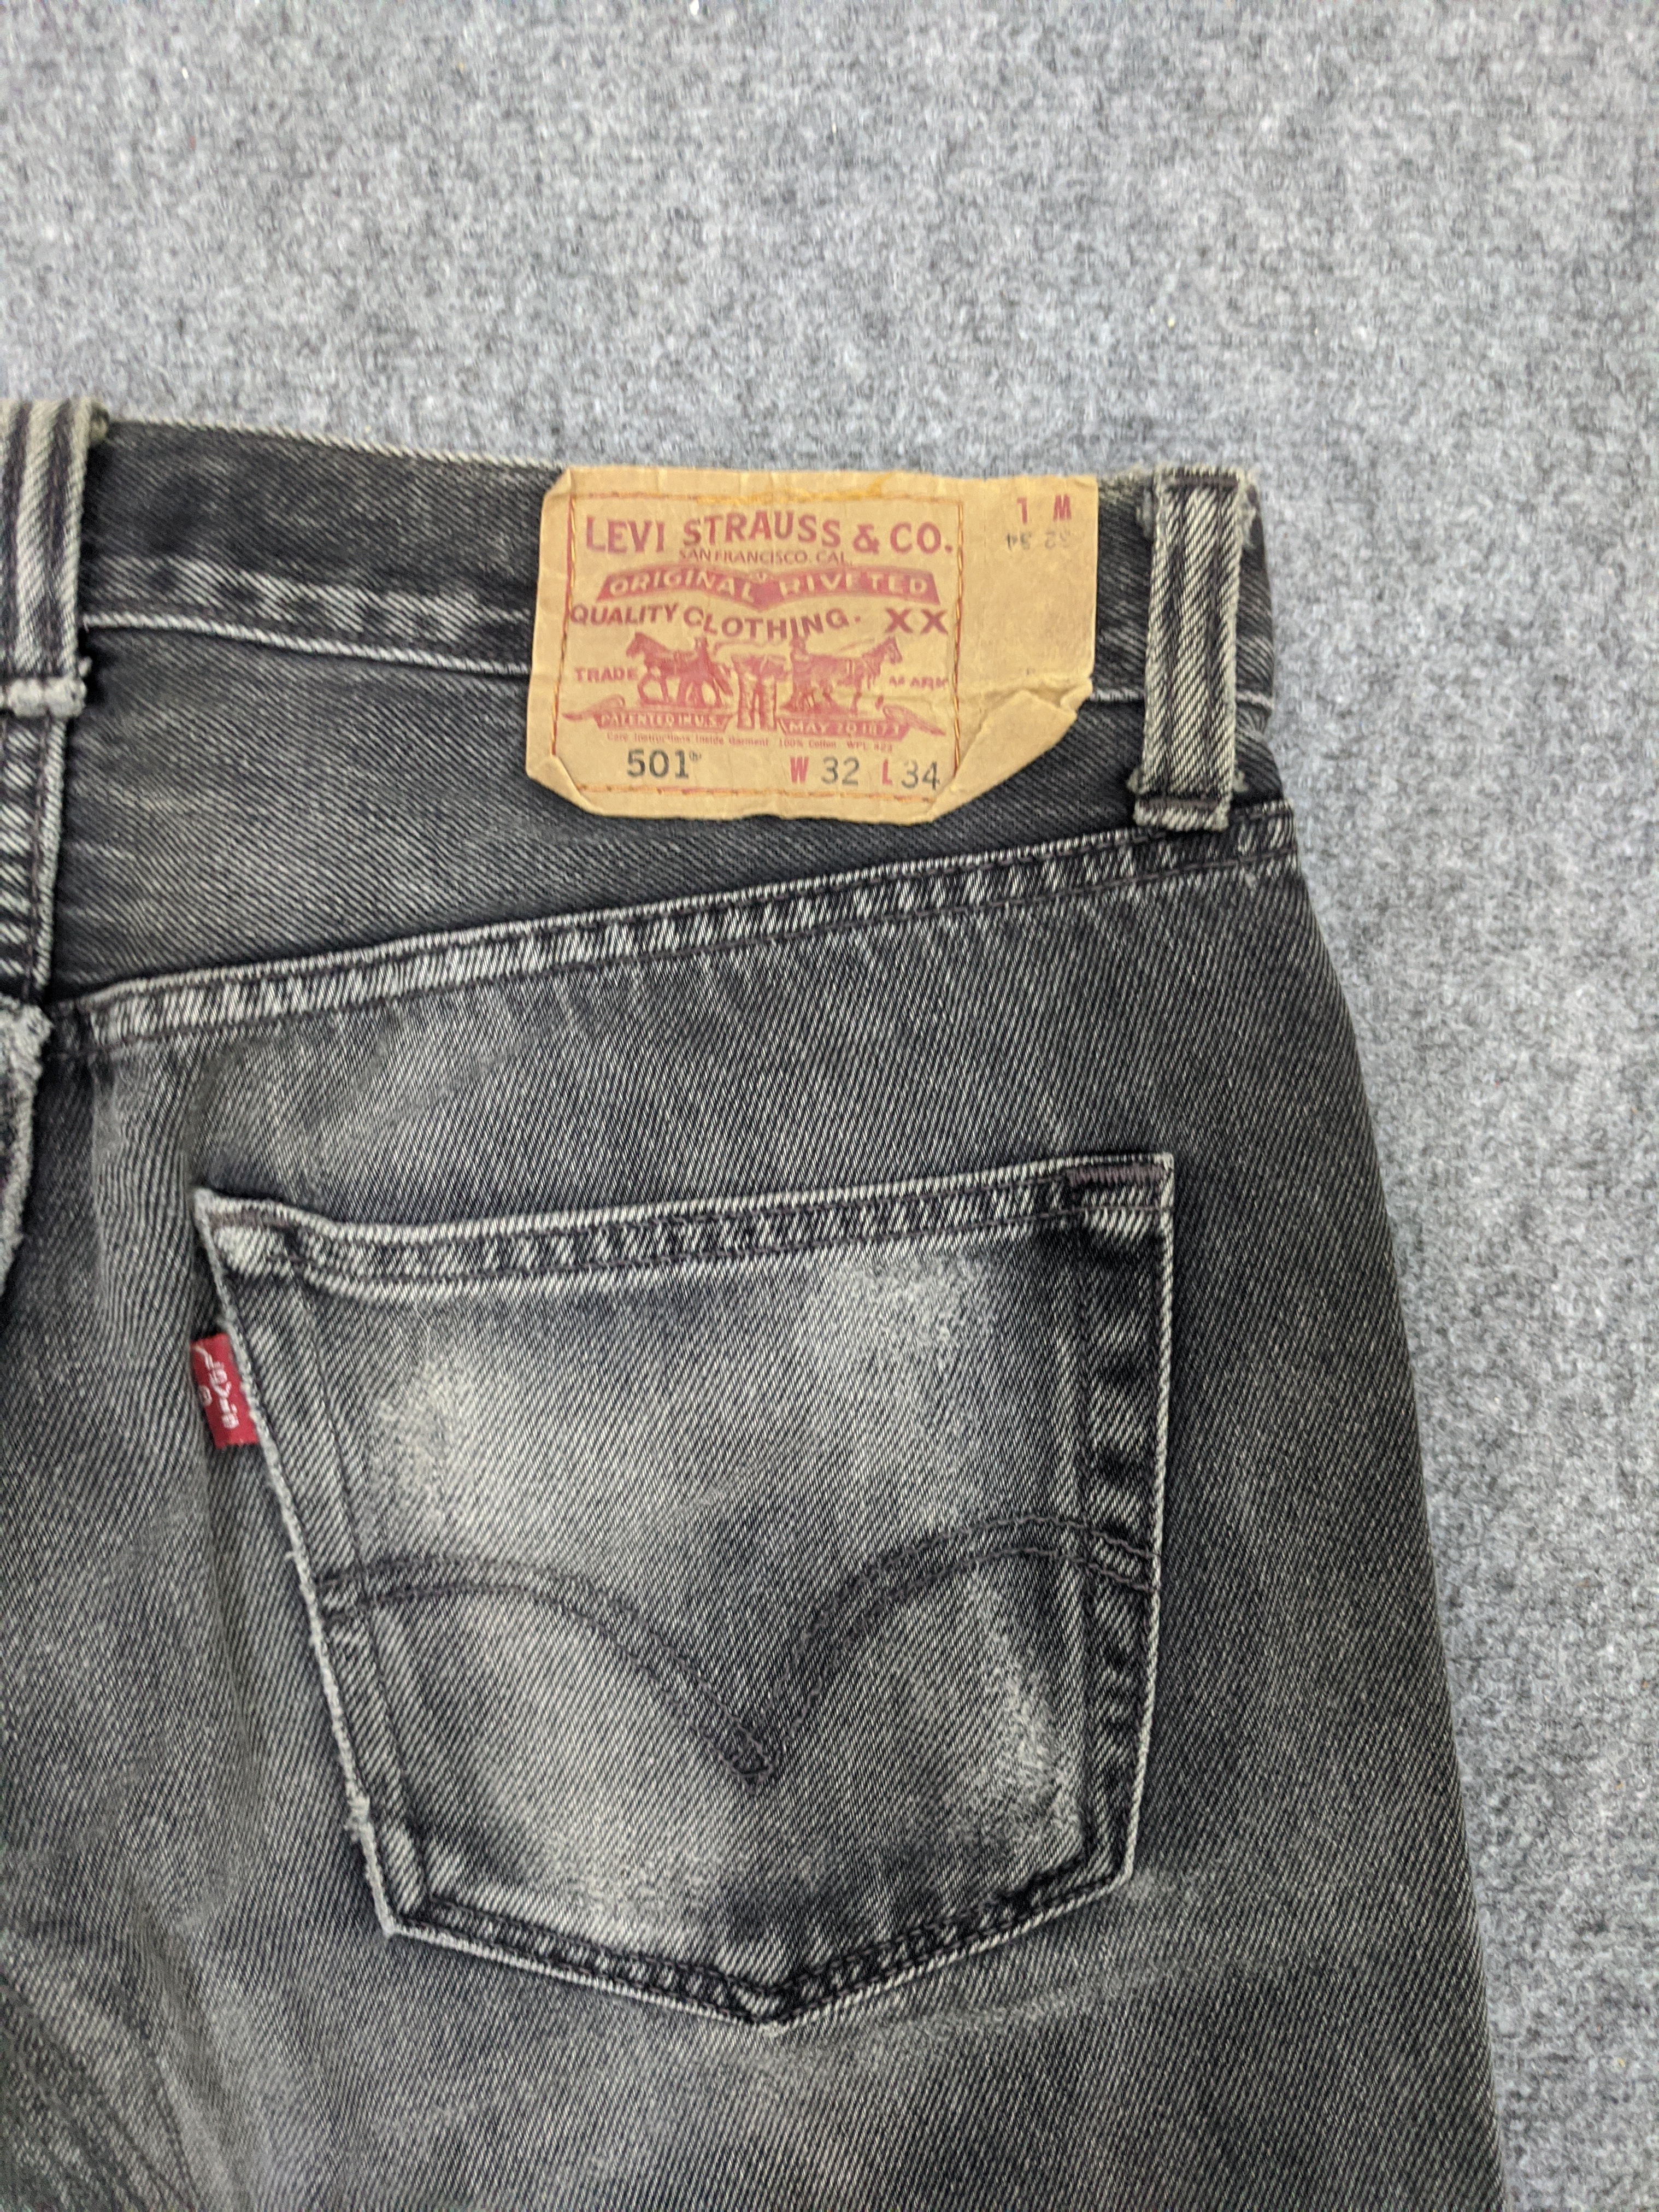 Vintage - Vintage Sun Faded Levis 501 Black Jeans